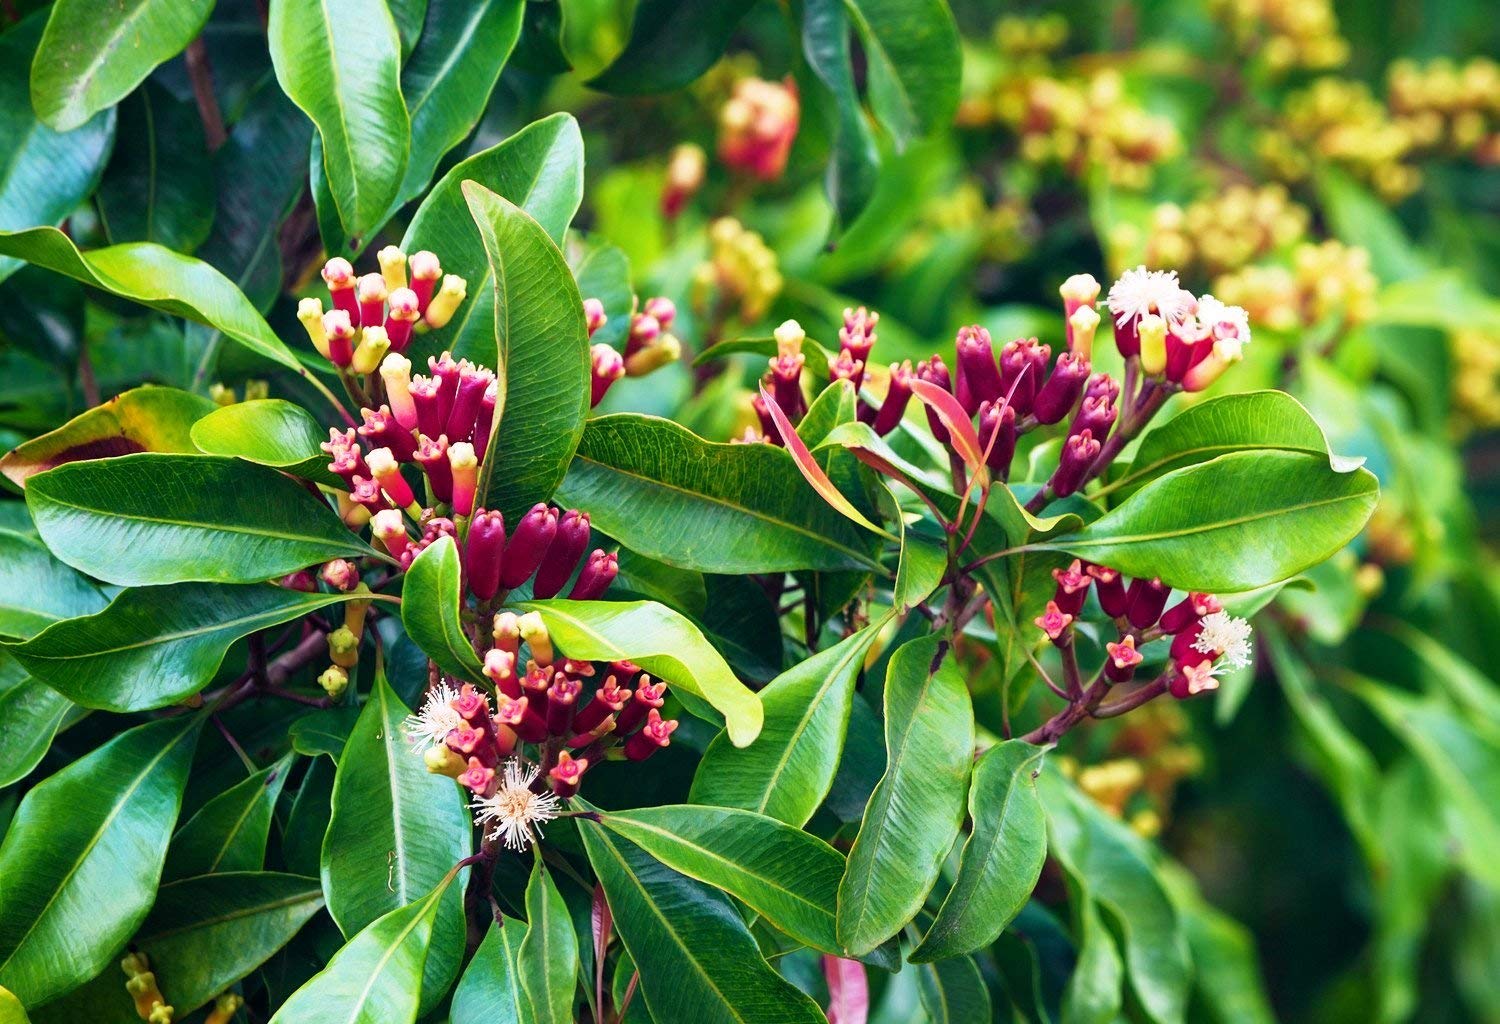 Clove/Syzygium Aromaticum Valuable Spice of The Orient Garden Plant(1 Healthy Live Plant)